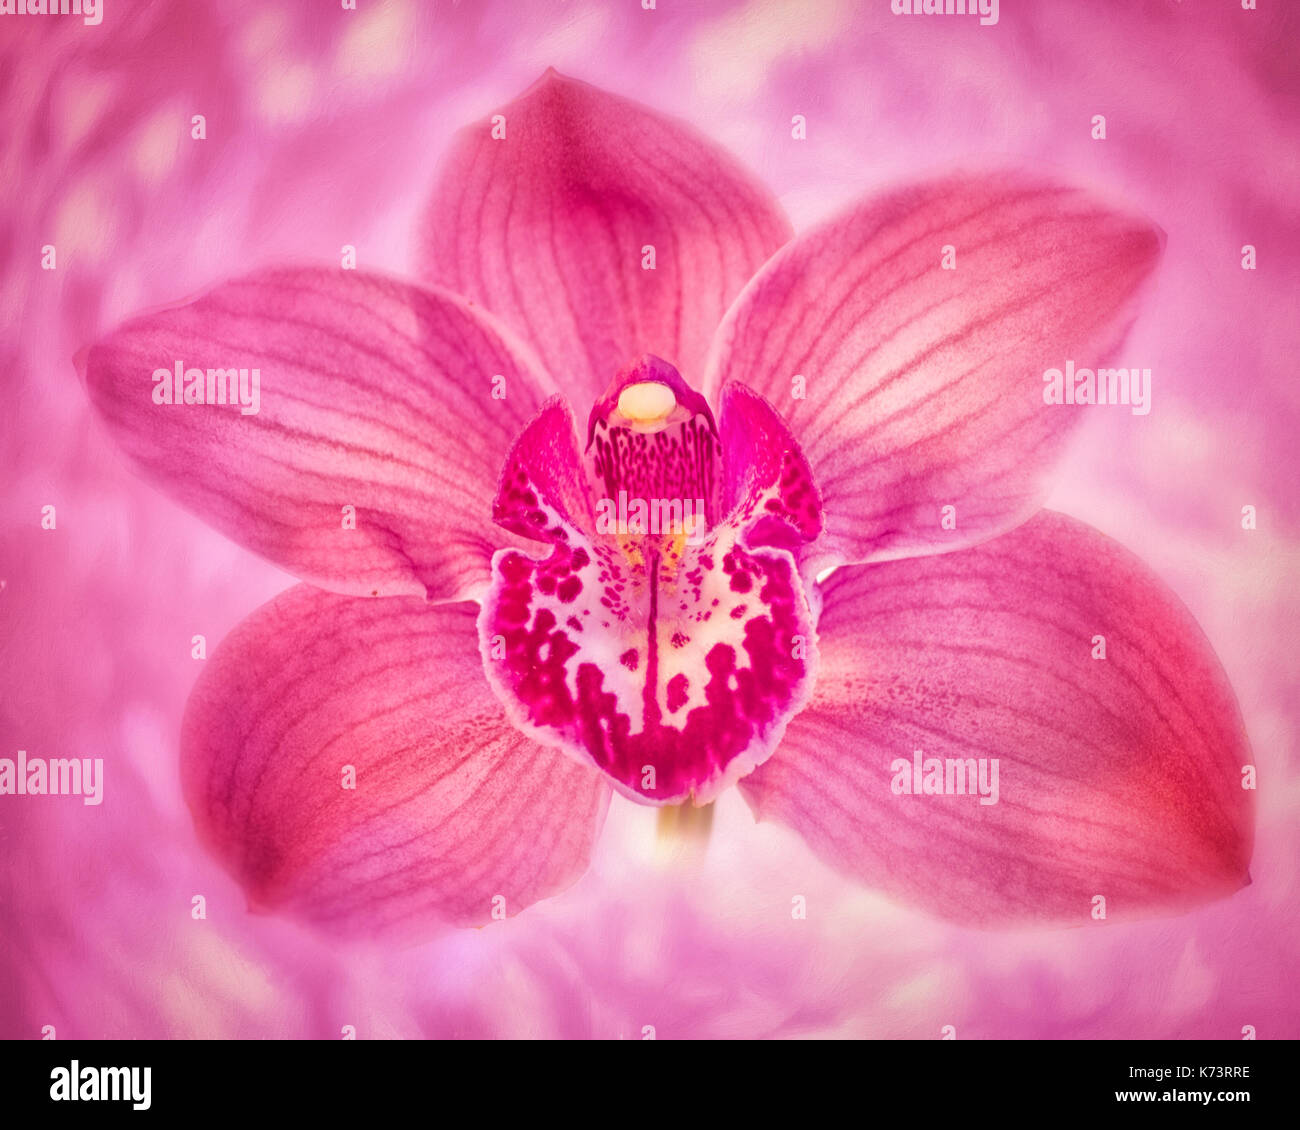 Pink Cattleya Lilly on pink swirl background Stock Photo